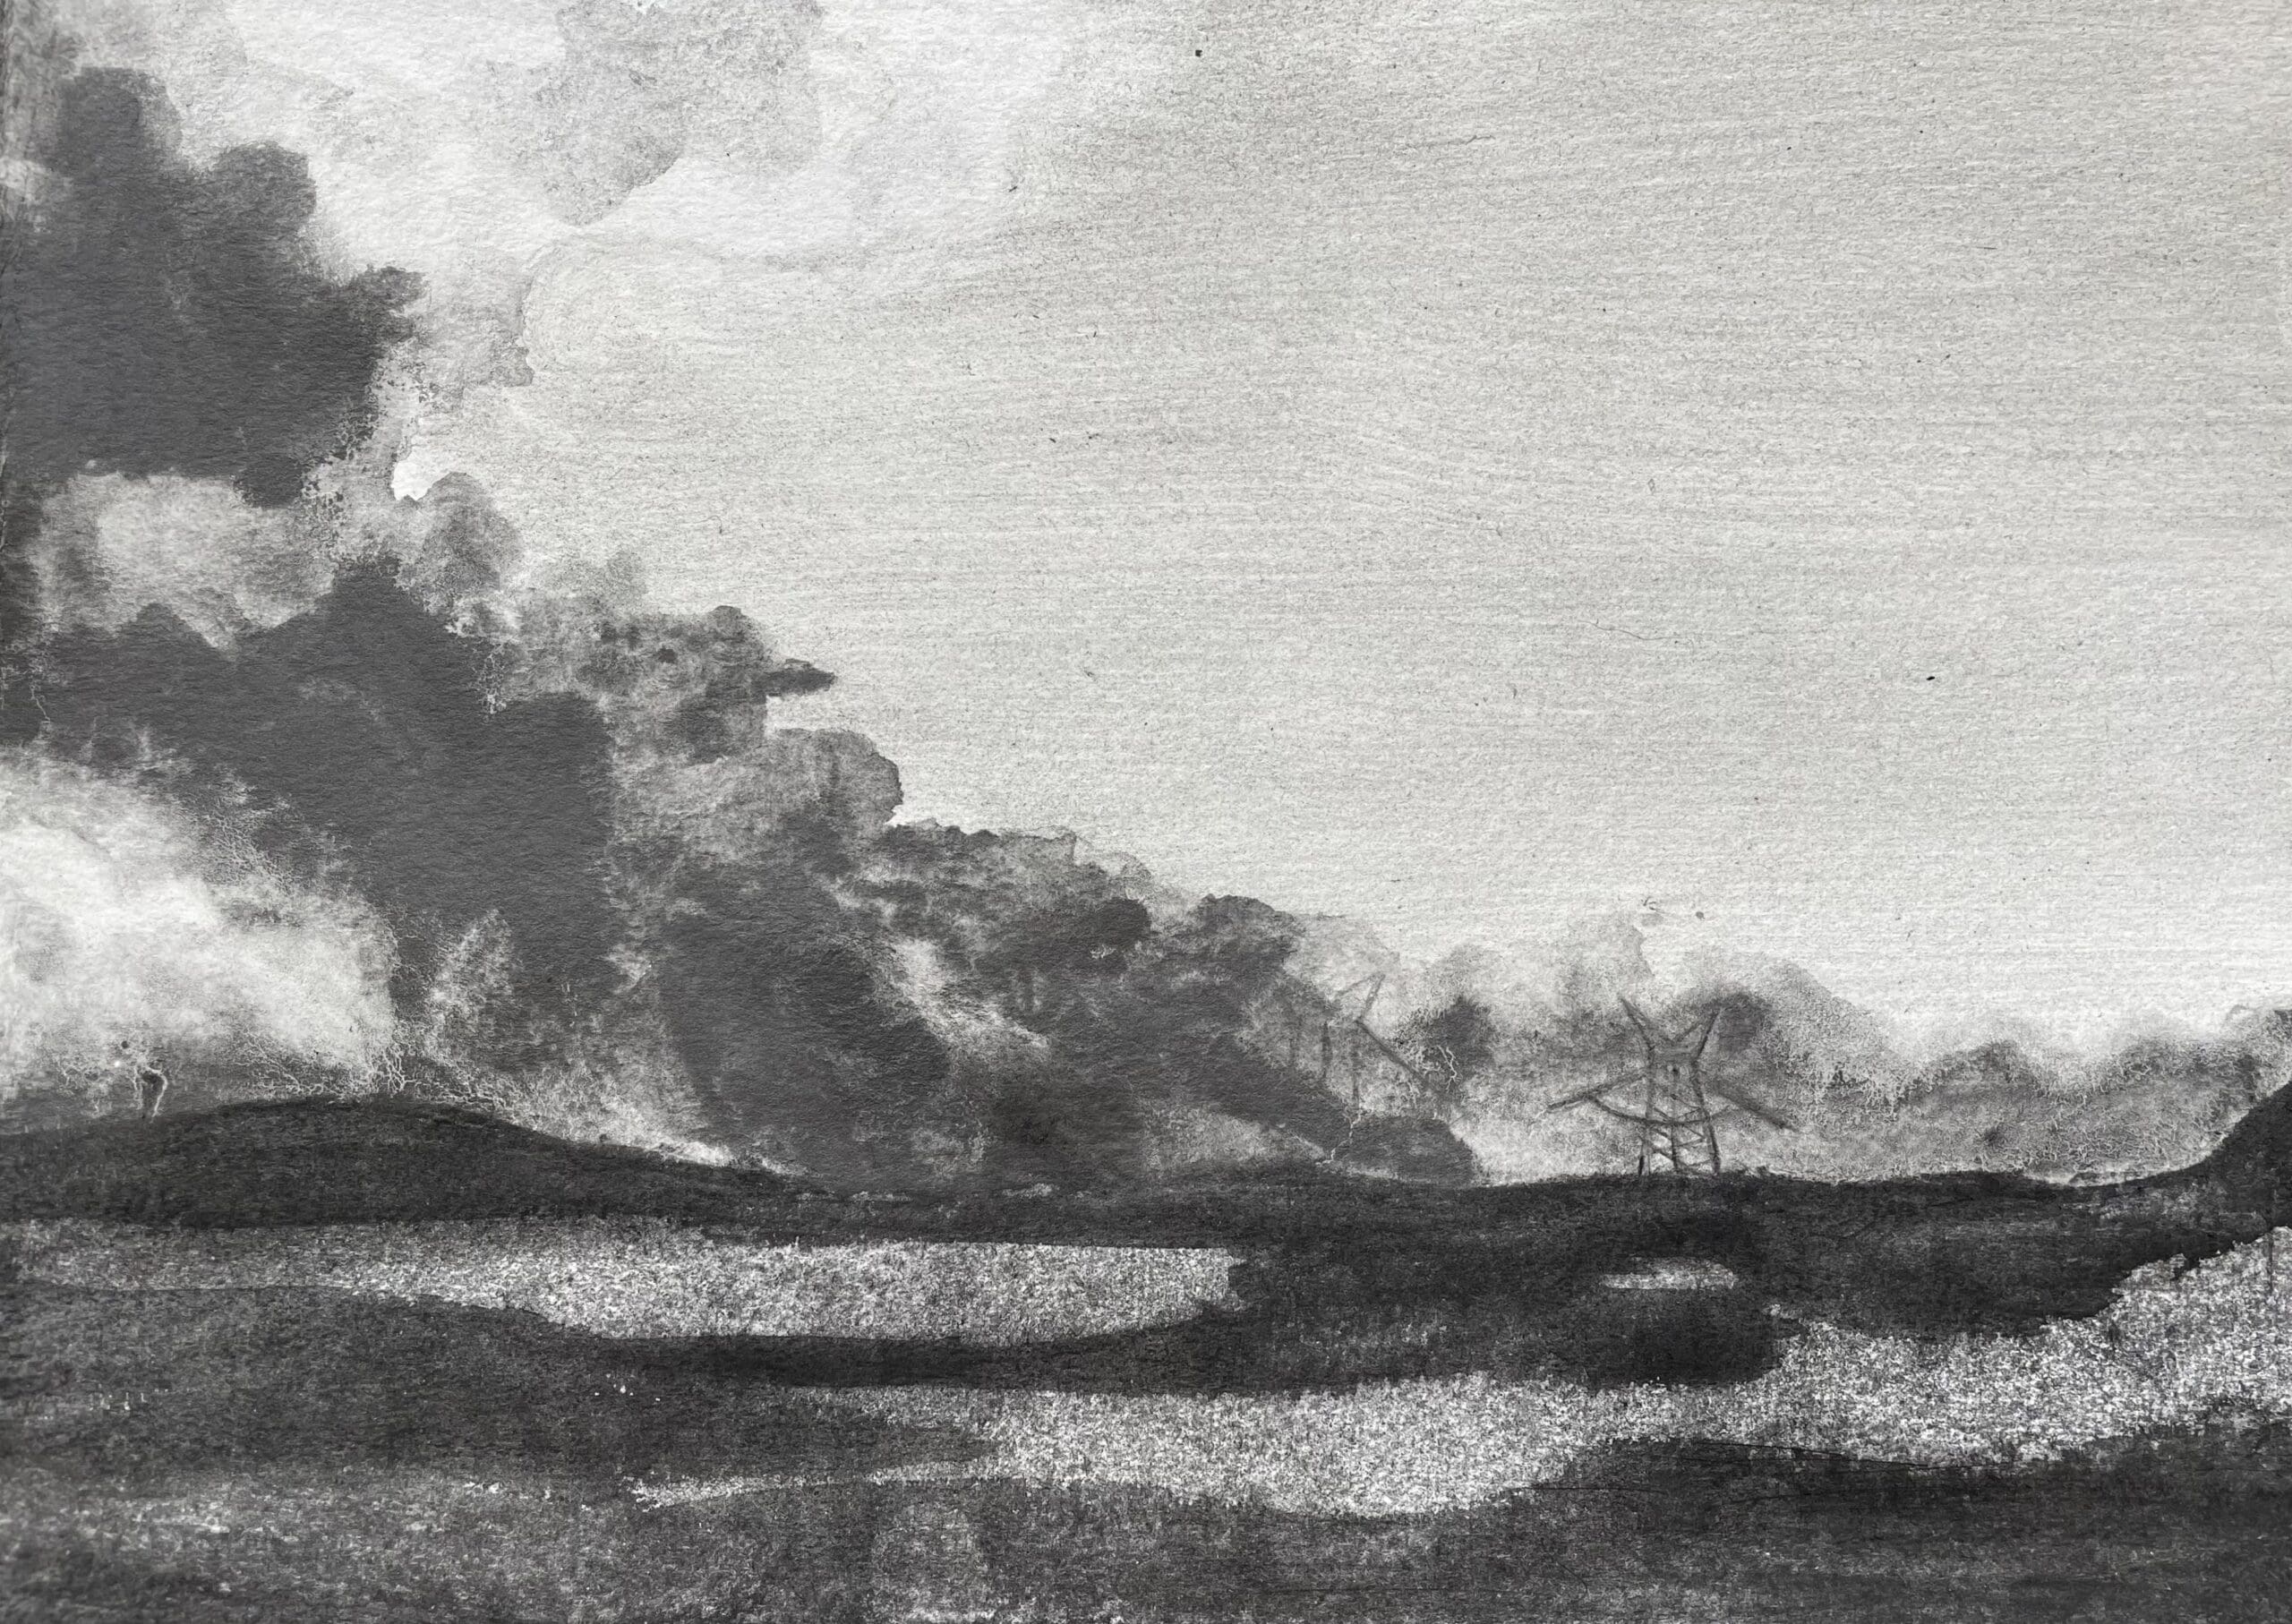 Wildfire III charcoal drawing